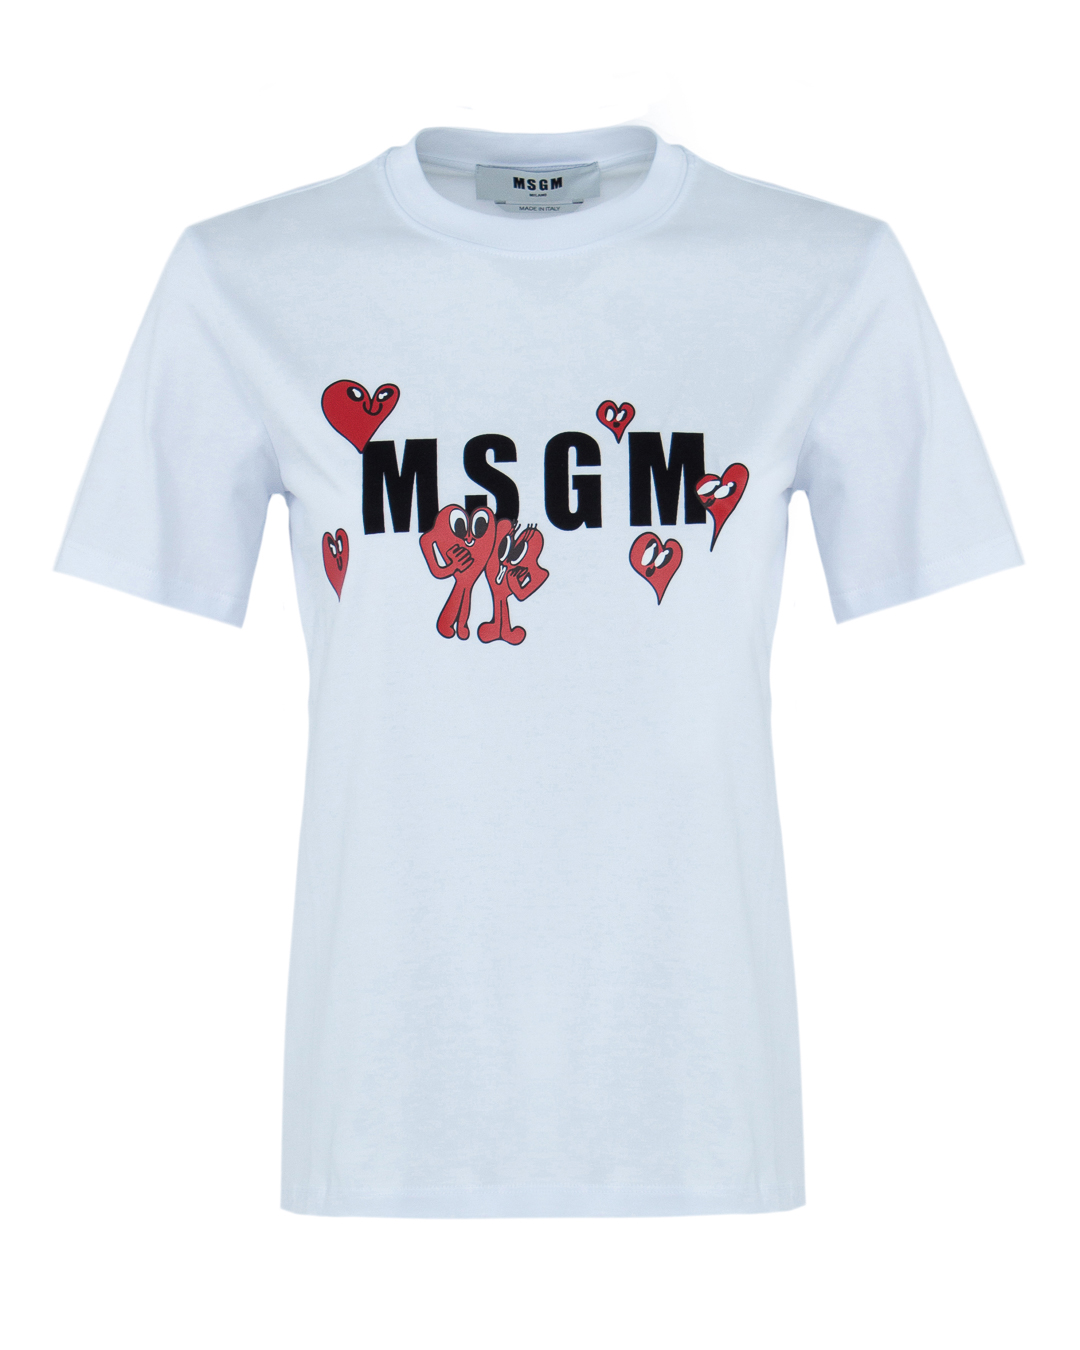 MSGM из хлопка с логотипом бренда артикул 3241MDM172 марки MSGM купить за 17100 руб.